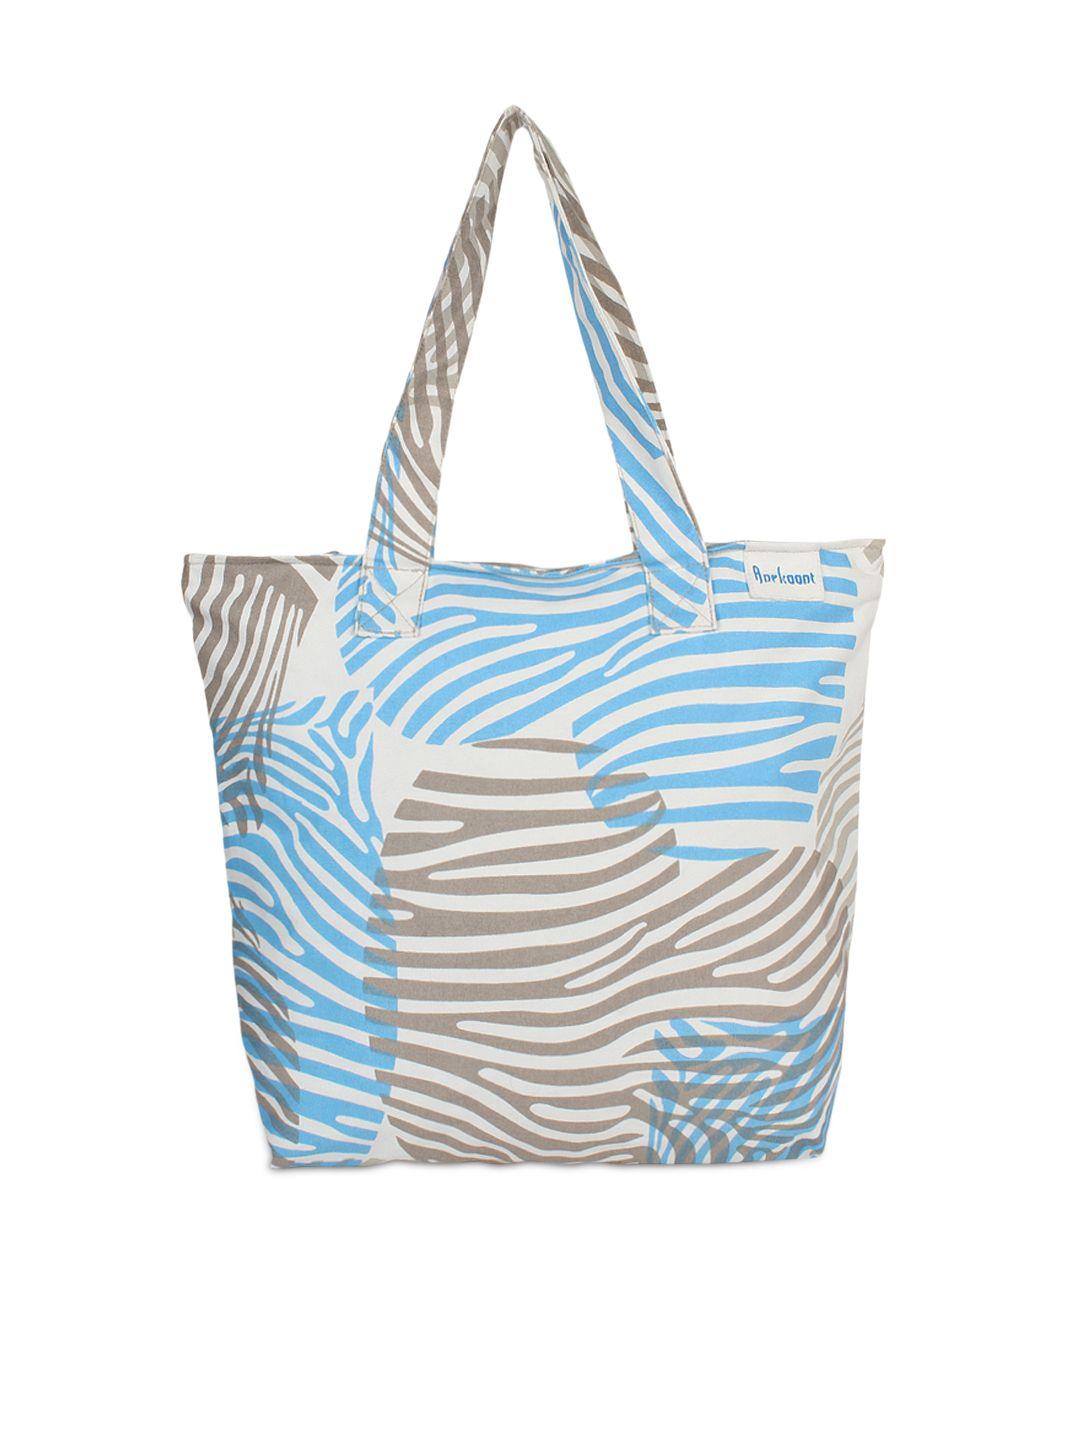 anekaant white & blue printed tote bag